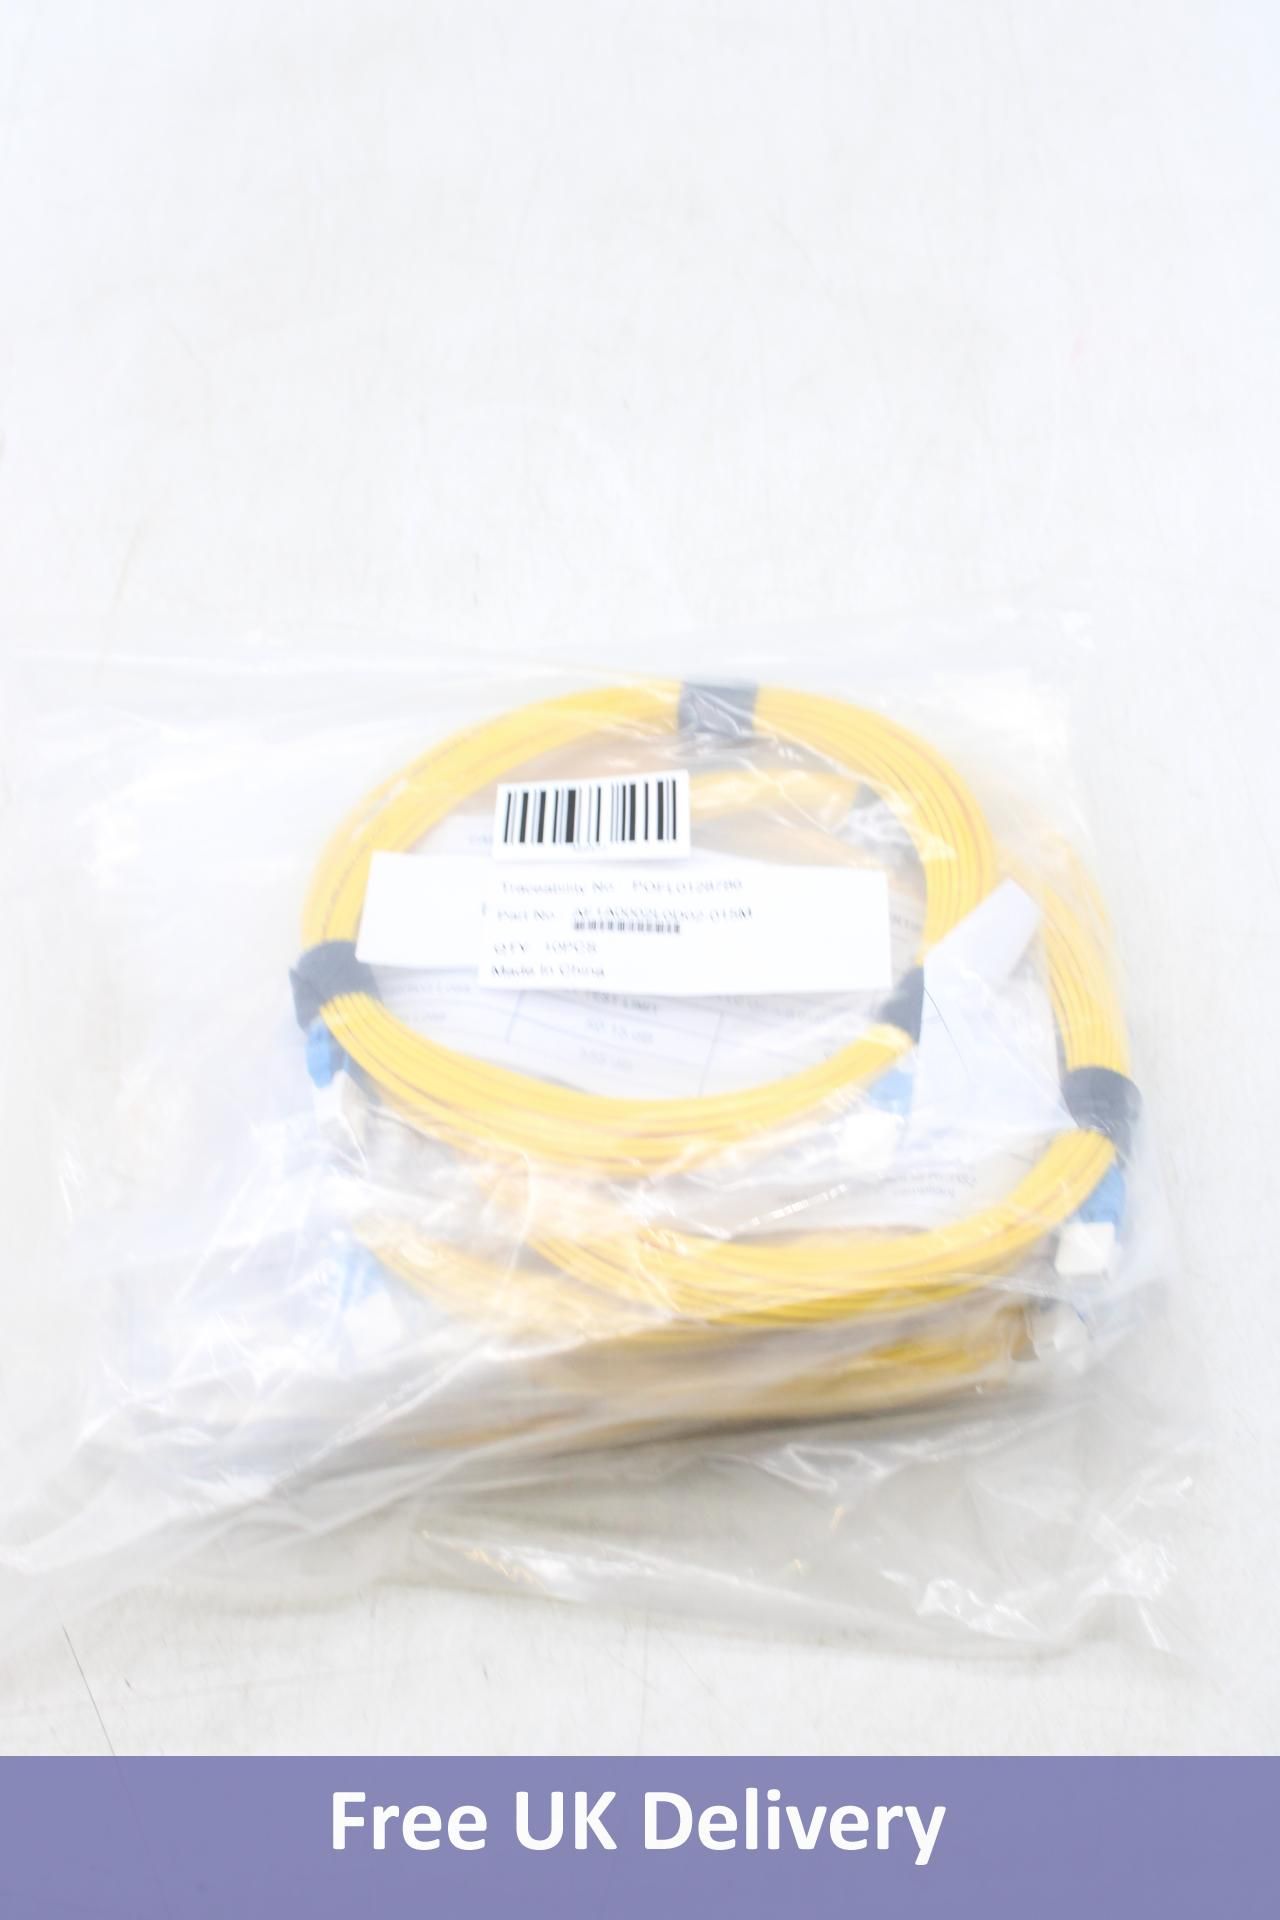 Ten Fifteen-metre Fibre Optic Cables, Yellow